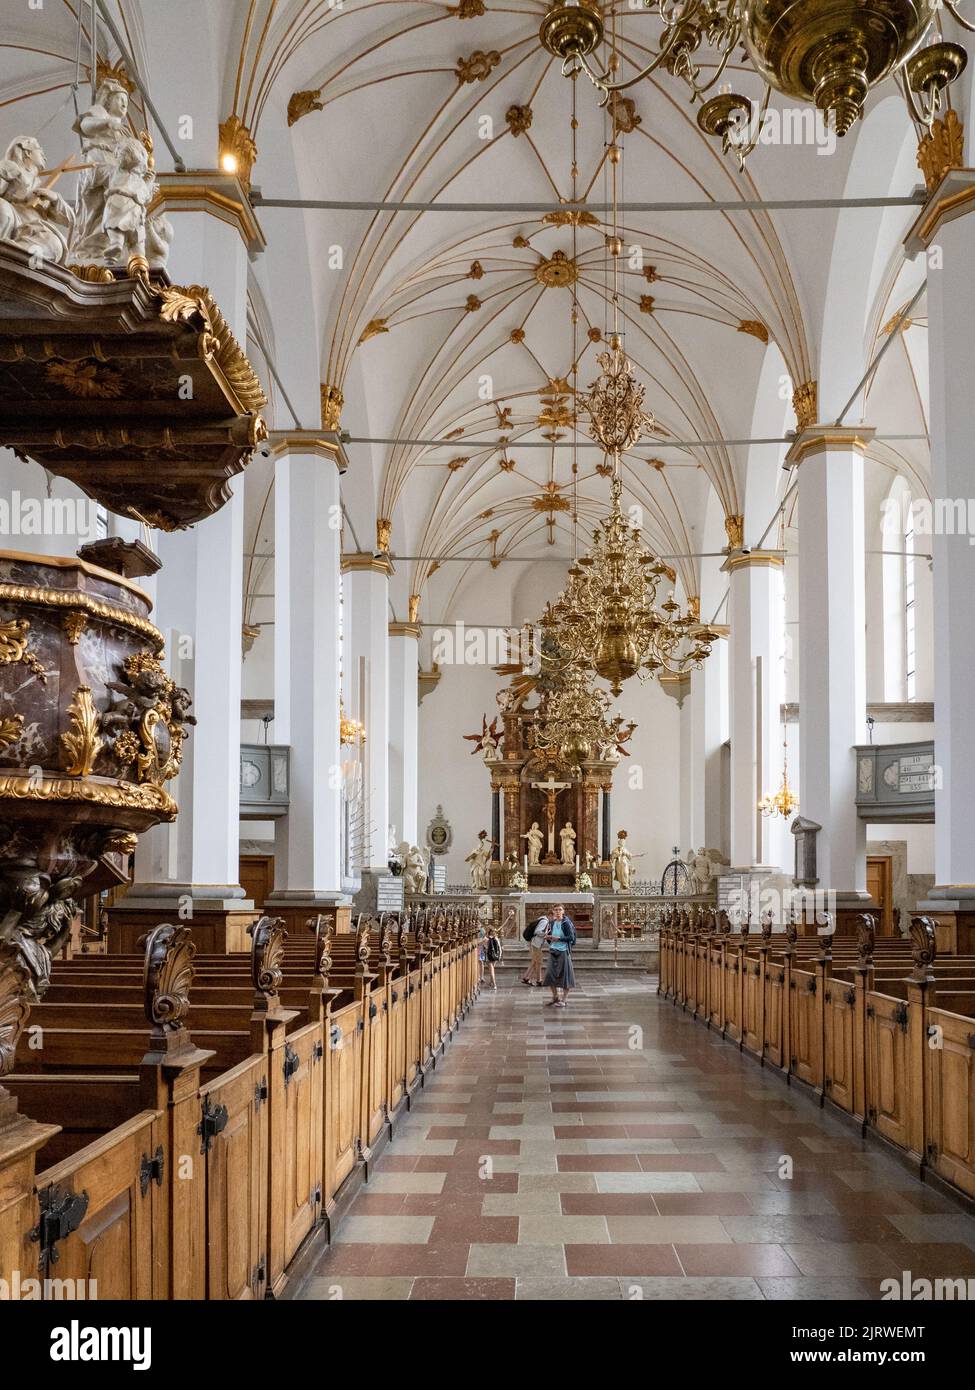 Richly decorated interior of 17th century Trinitatis Church in the University quarter of Copenhagen Denmark Stock Photo